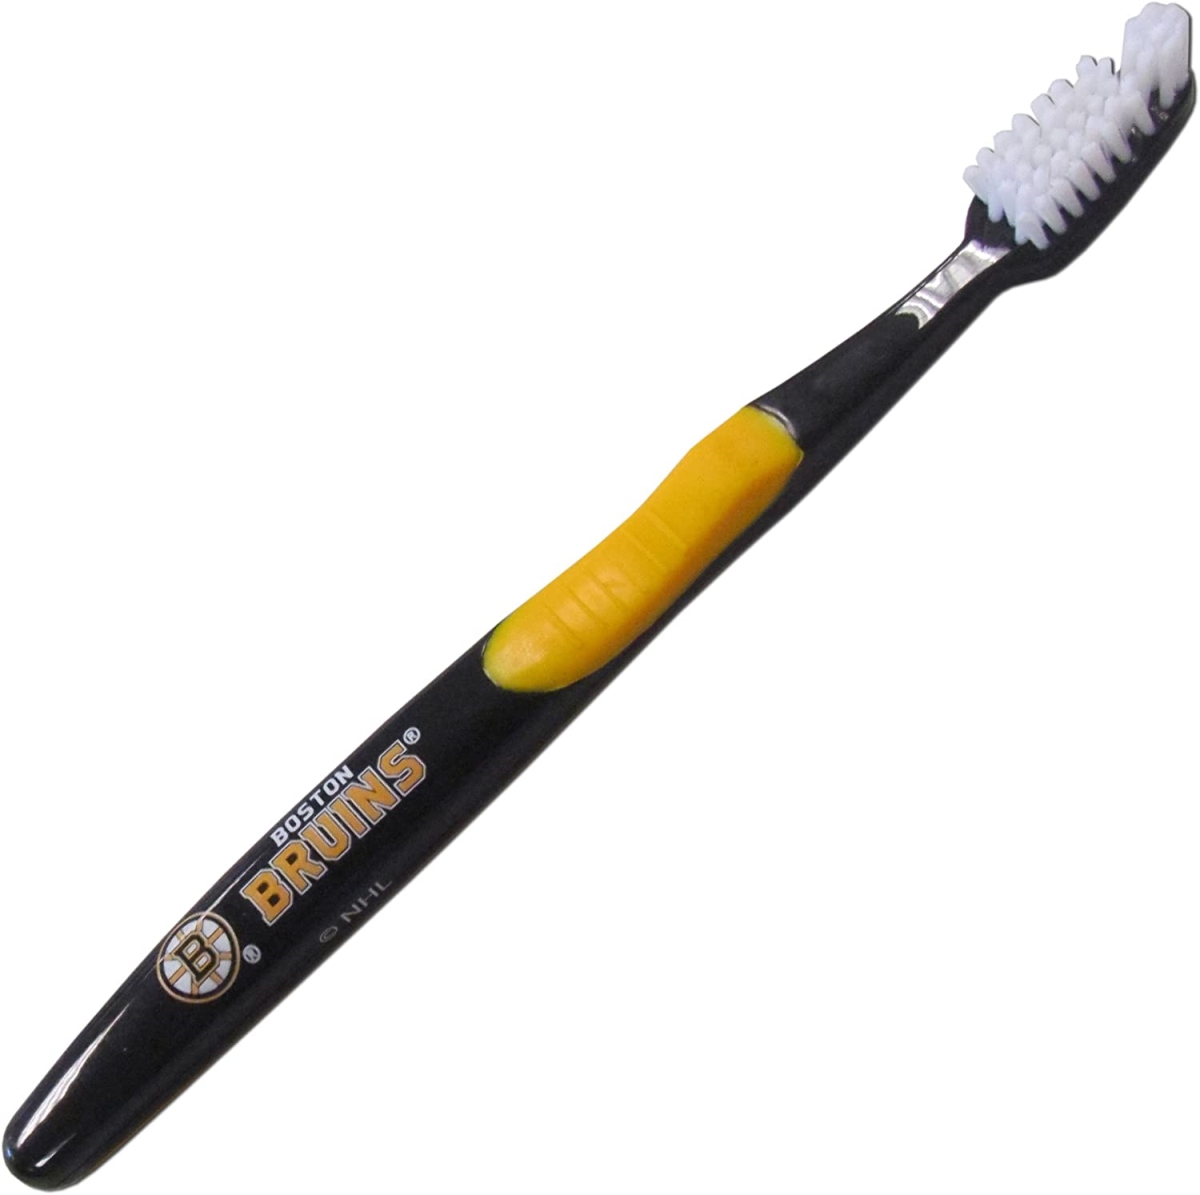 Siskiyou Sports Siskiyou HBR20-3 NHL Boston Bruins Toothbrush - Set of 3